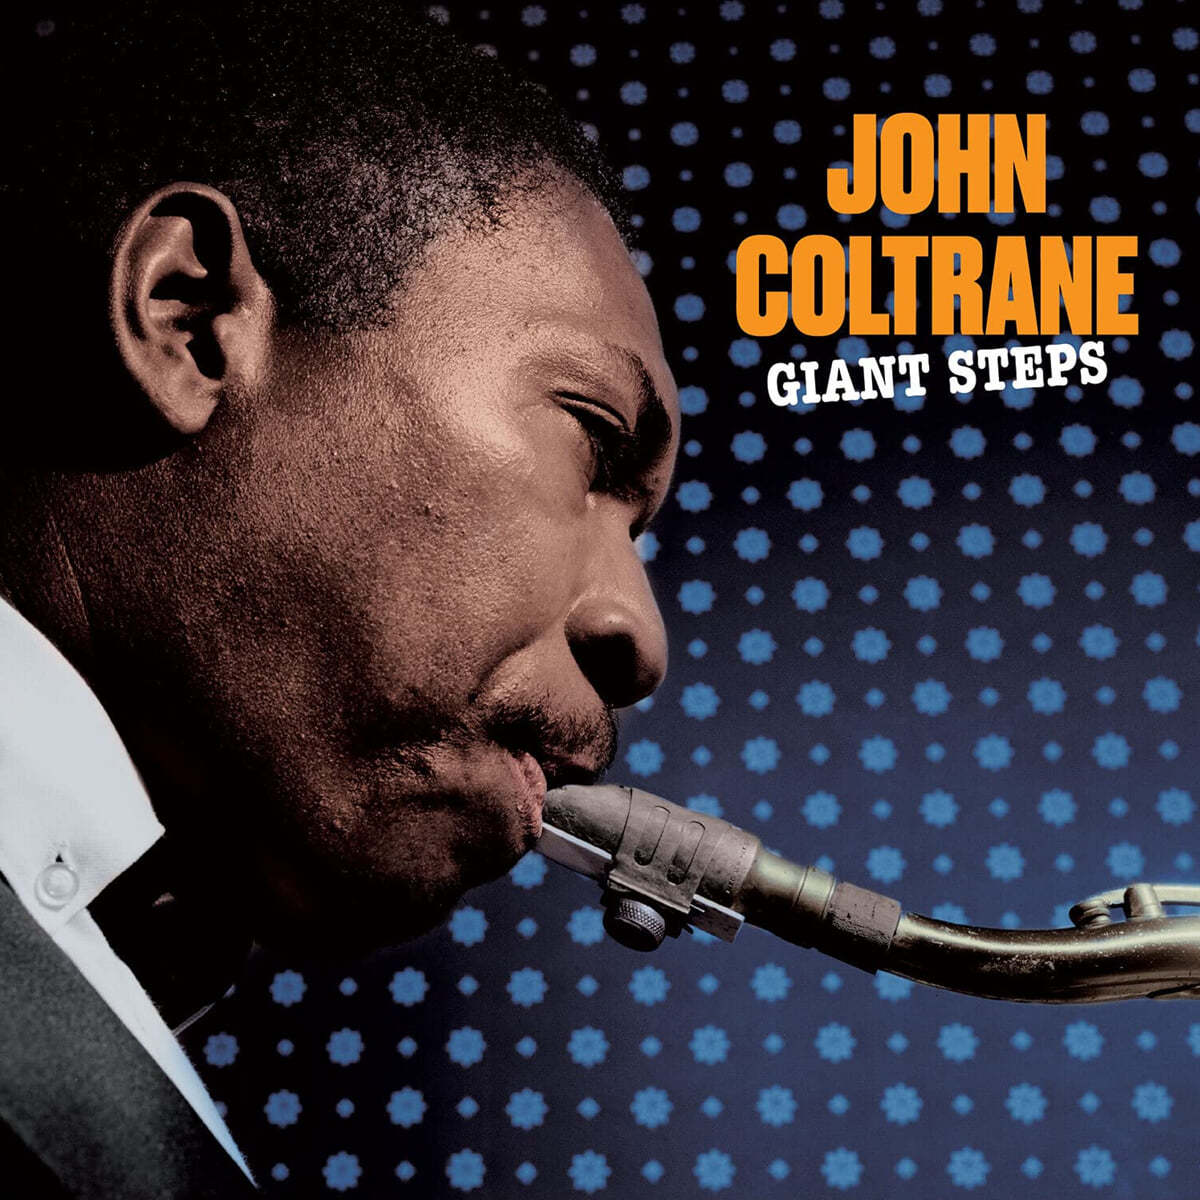 John Coltrane (존 콜트레인) - Giant Steps [블루 컬러 LP]